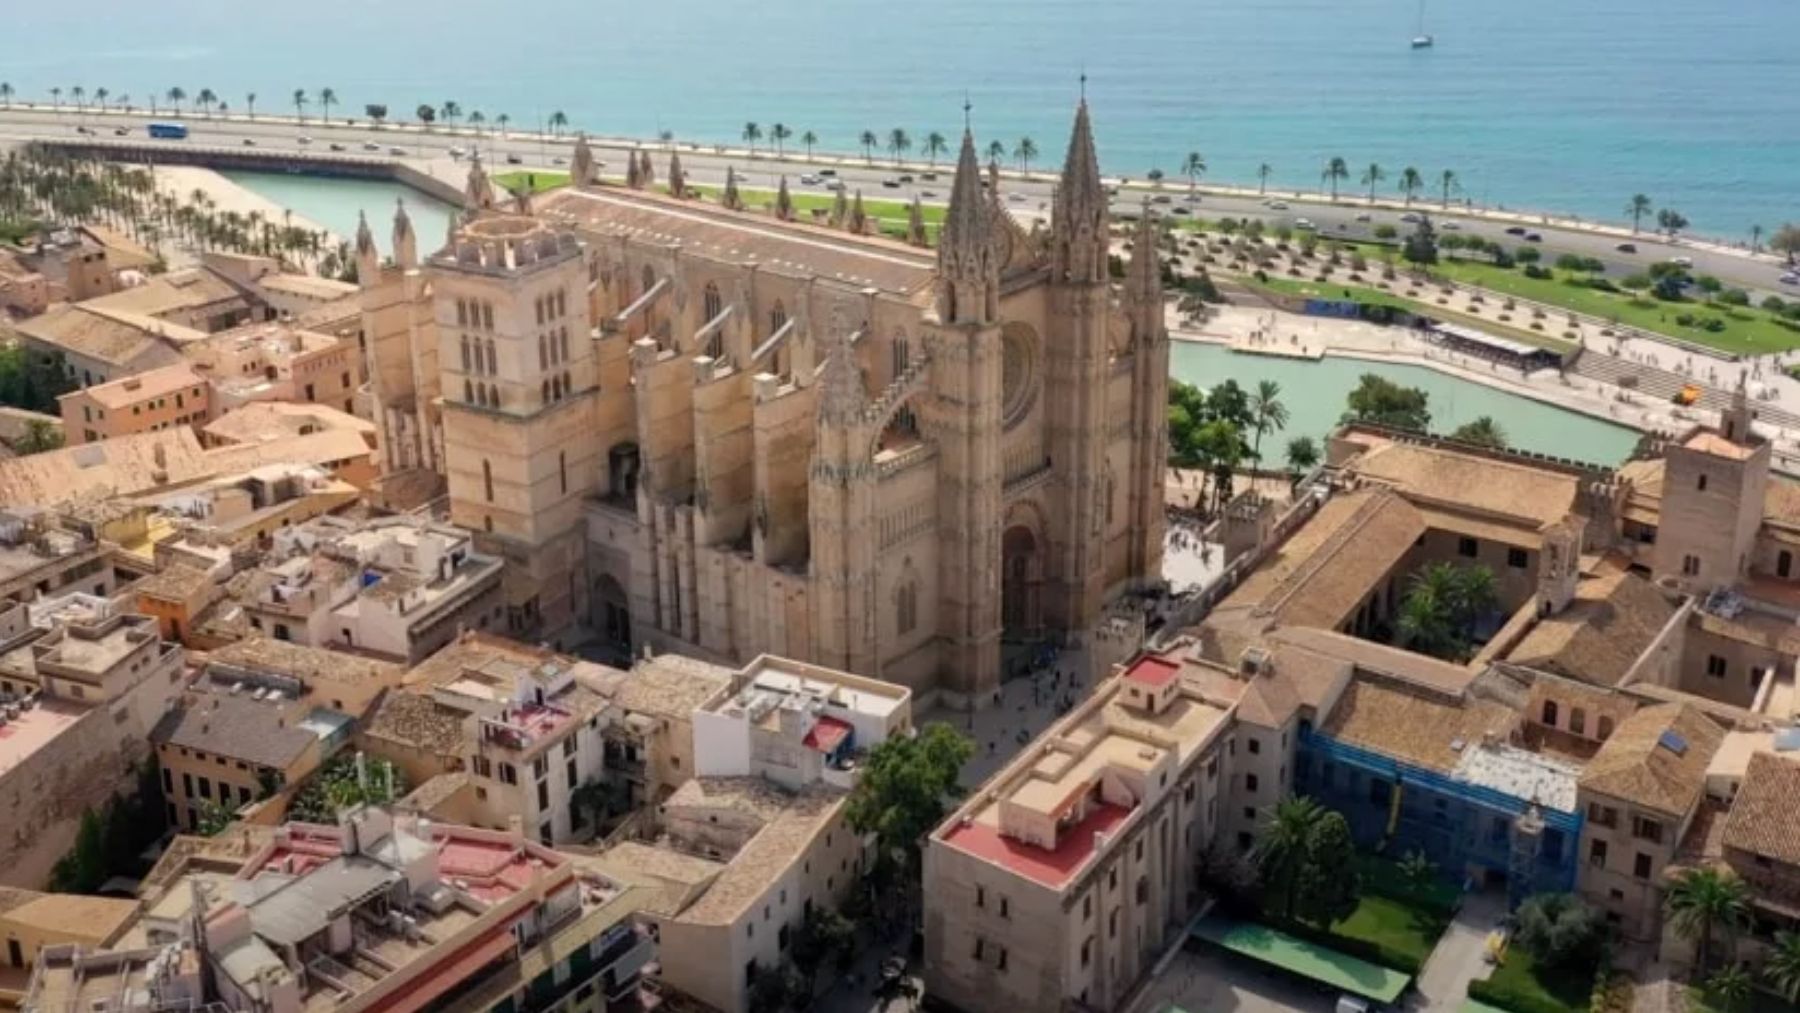 Catedral de Palma.